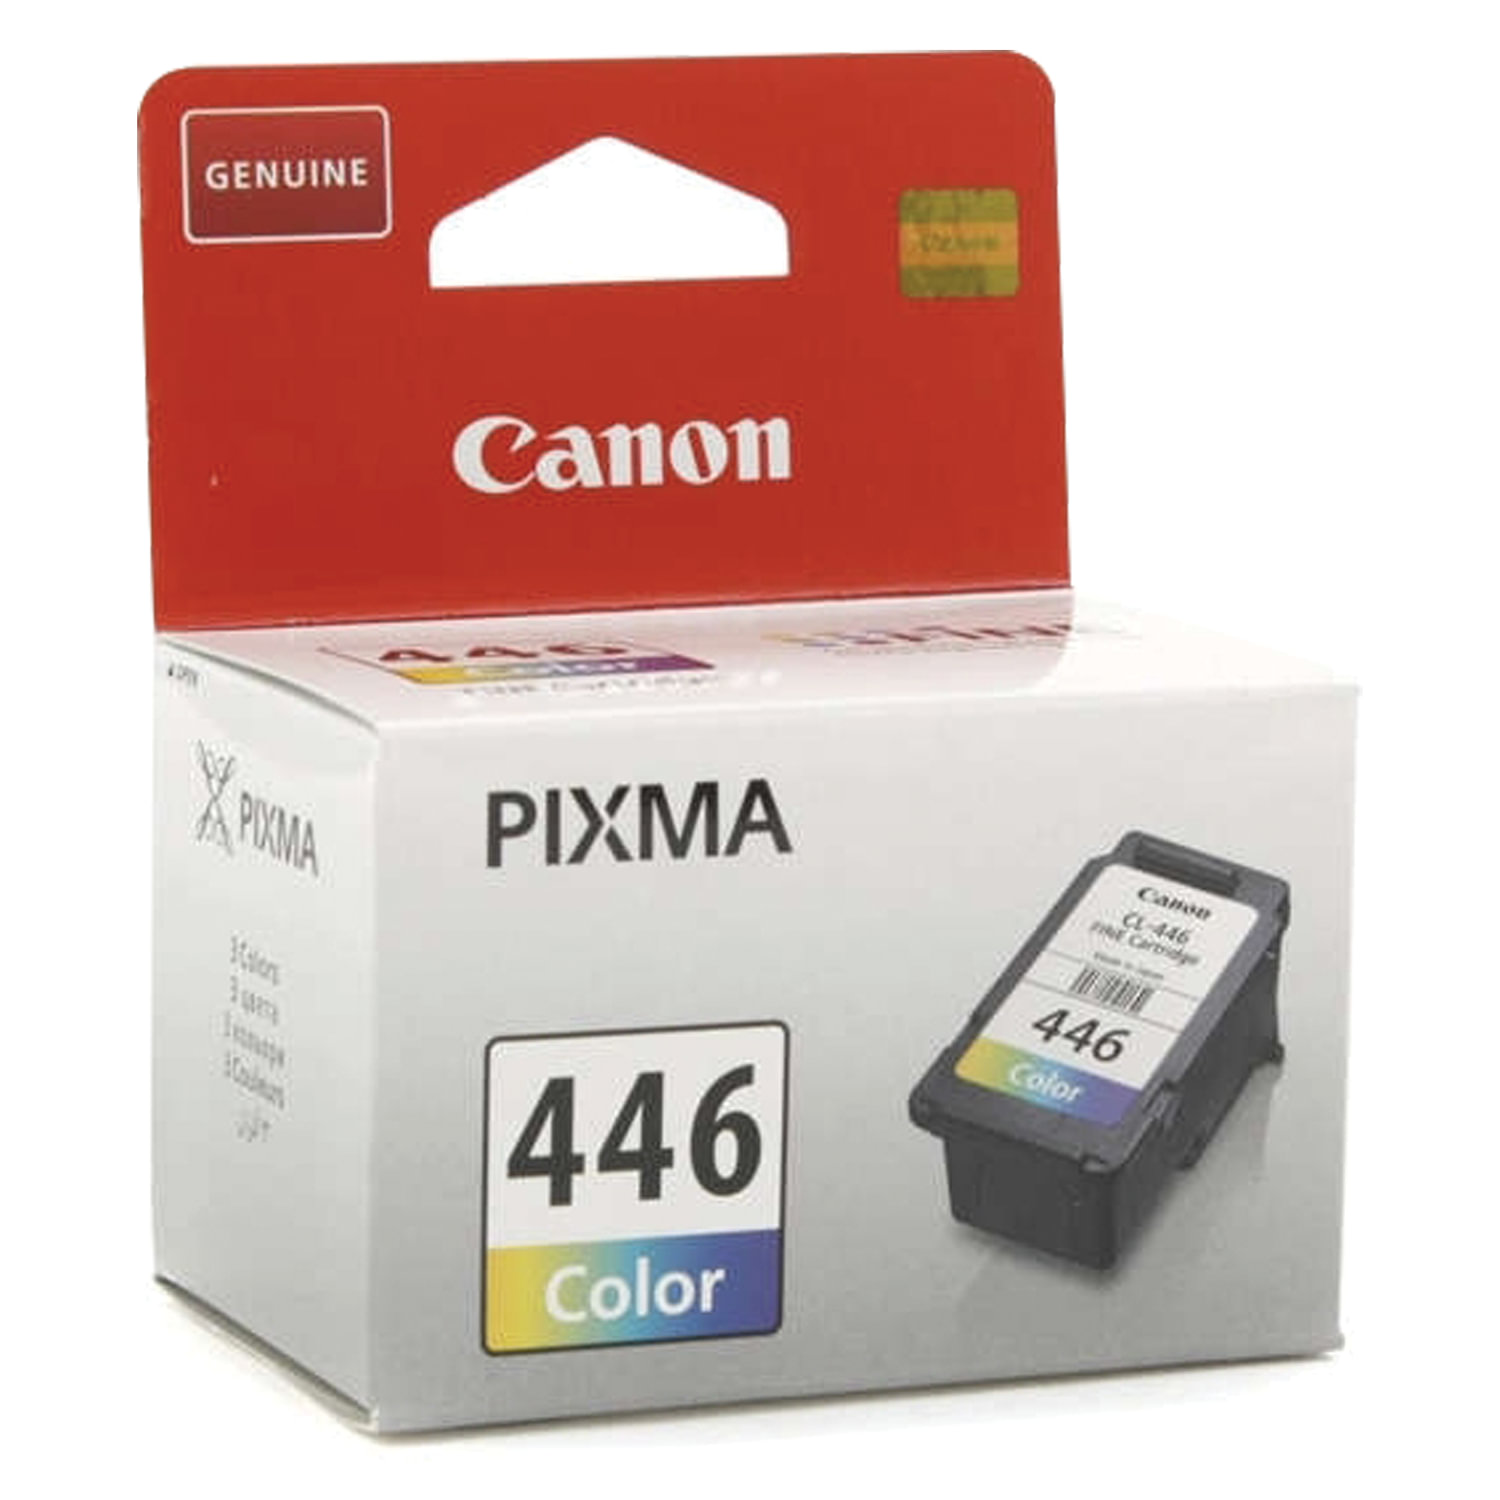 Картриджи canon pixma mg. Картридж Canon PG-445xl черный. Canon CL-446. Canon картридж Canon PG-445. PG-445 (8283b001).